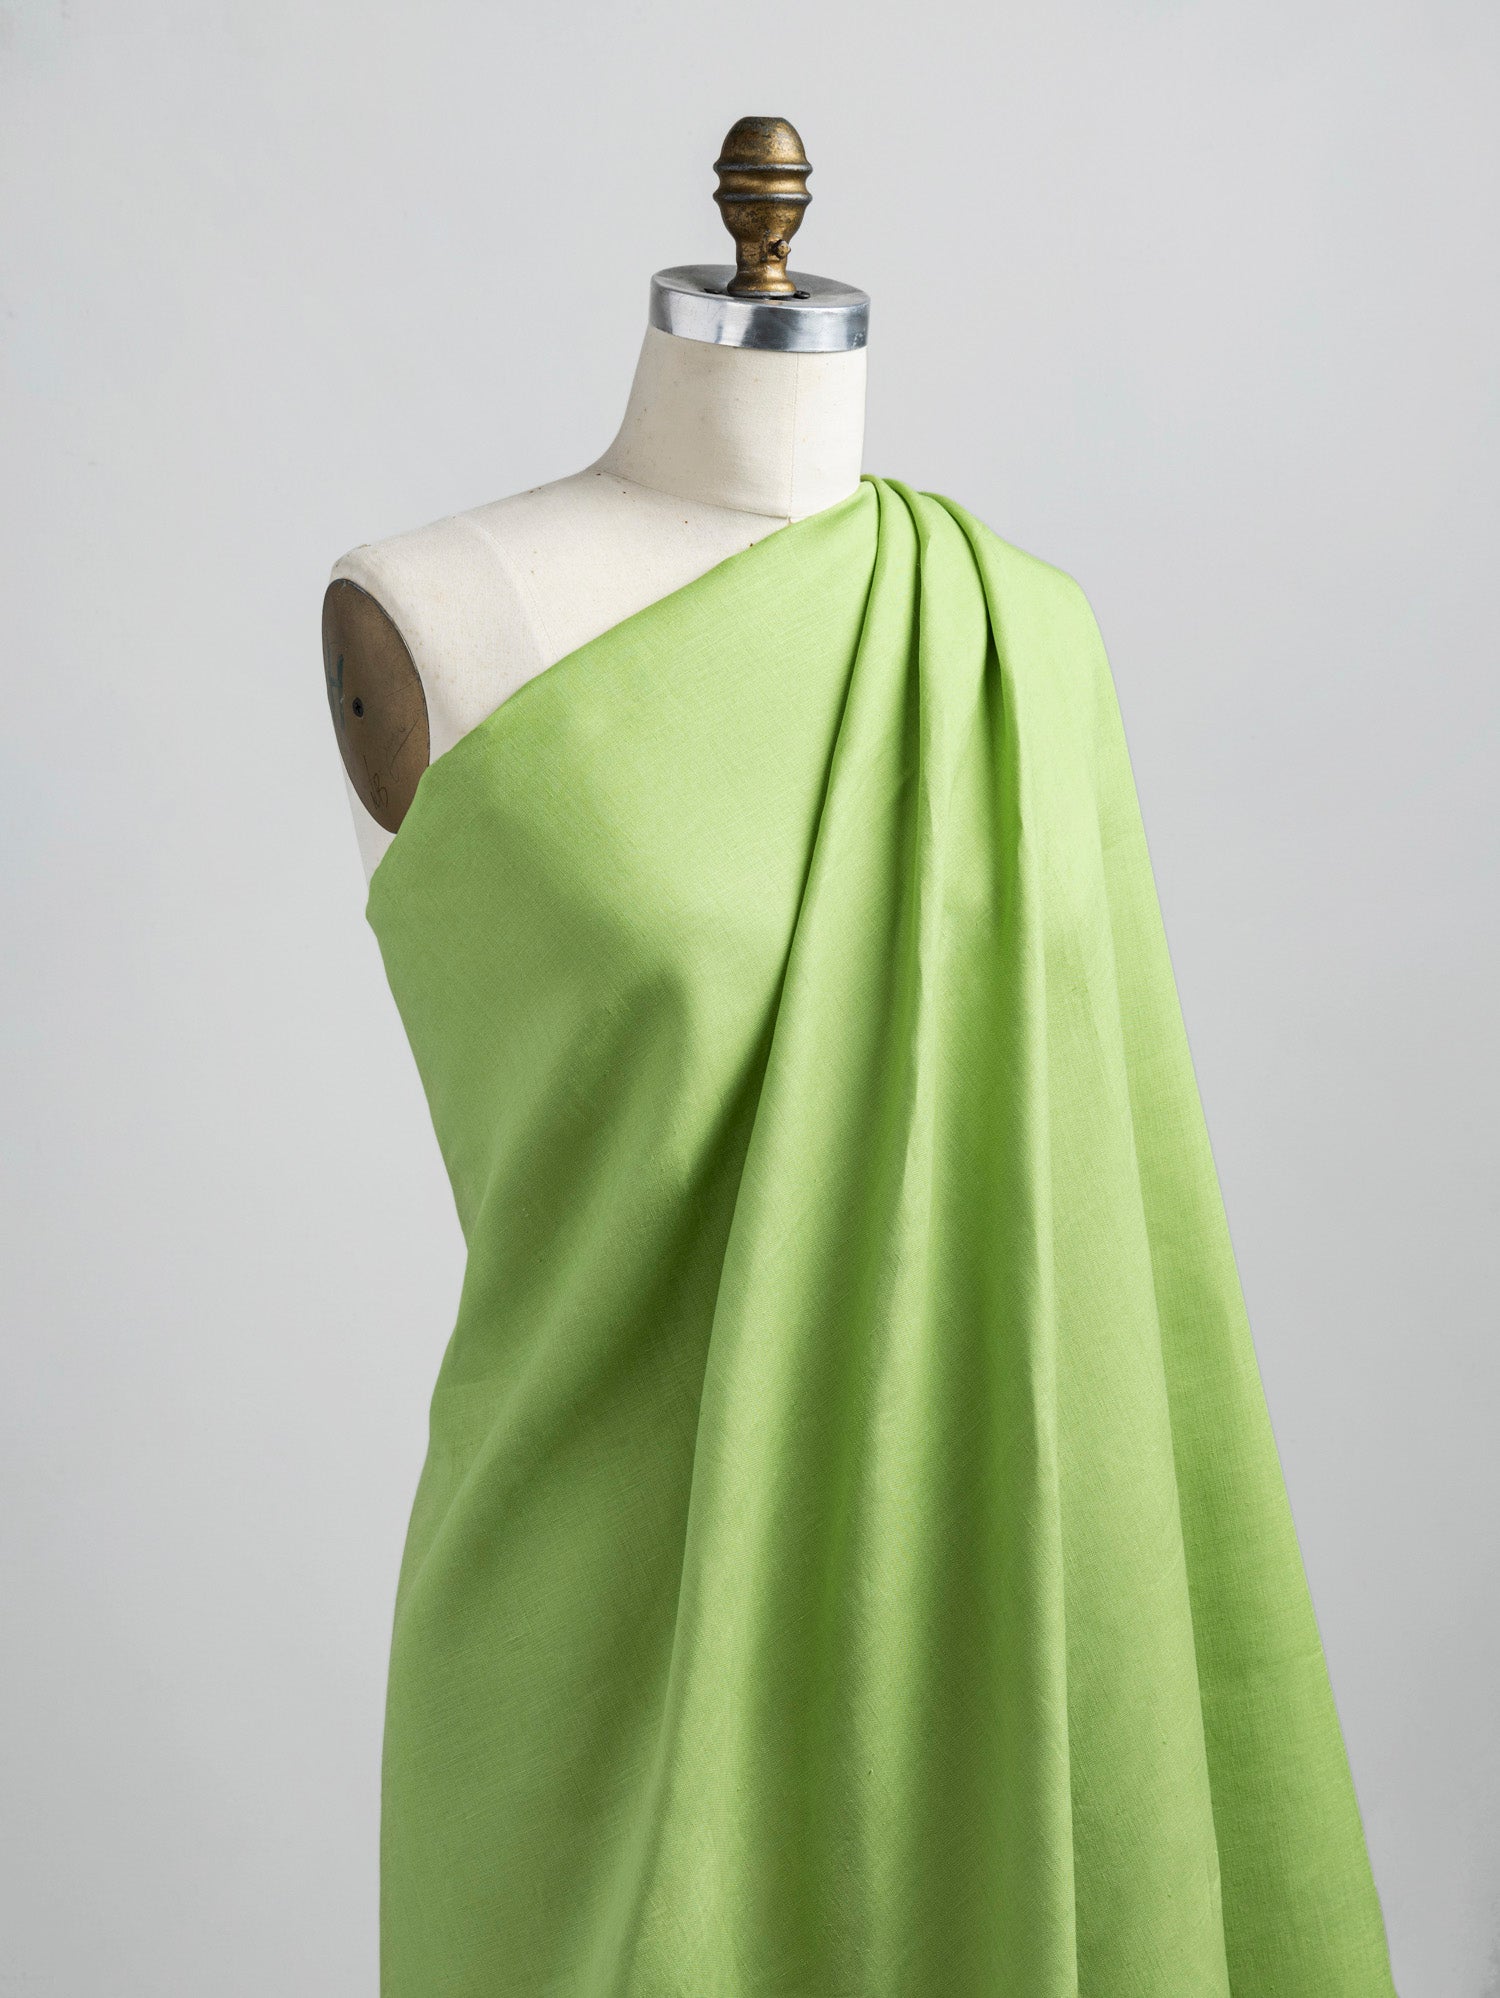 Lightweight European Linen - Granny Smith | Core Fabrics